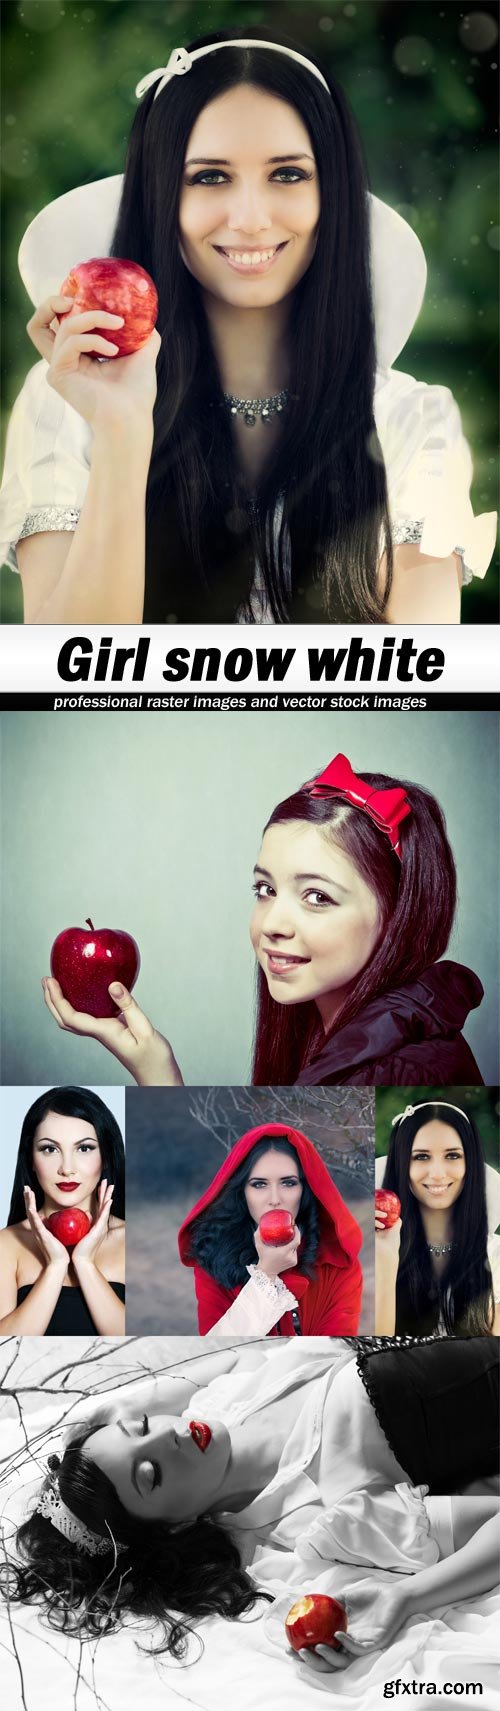 Girl snow white